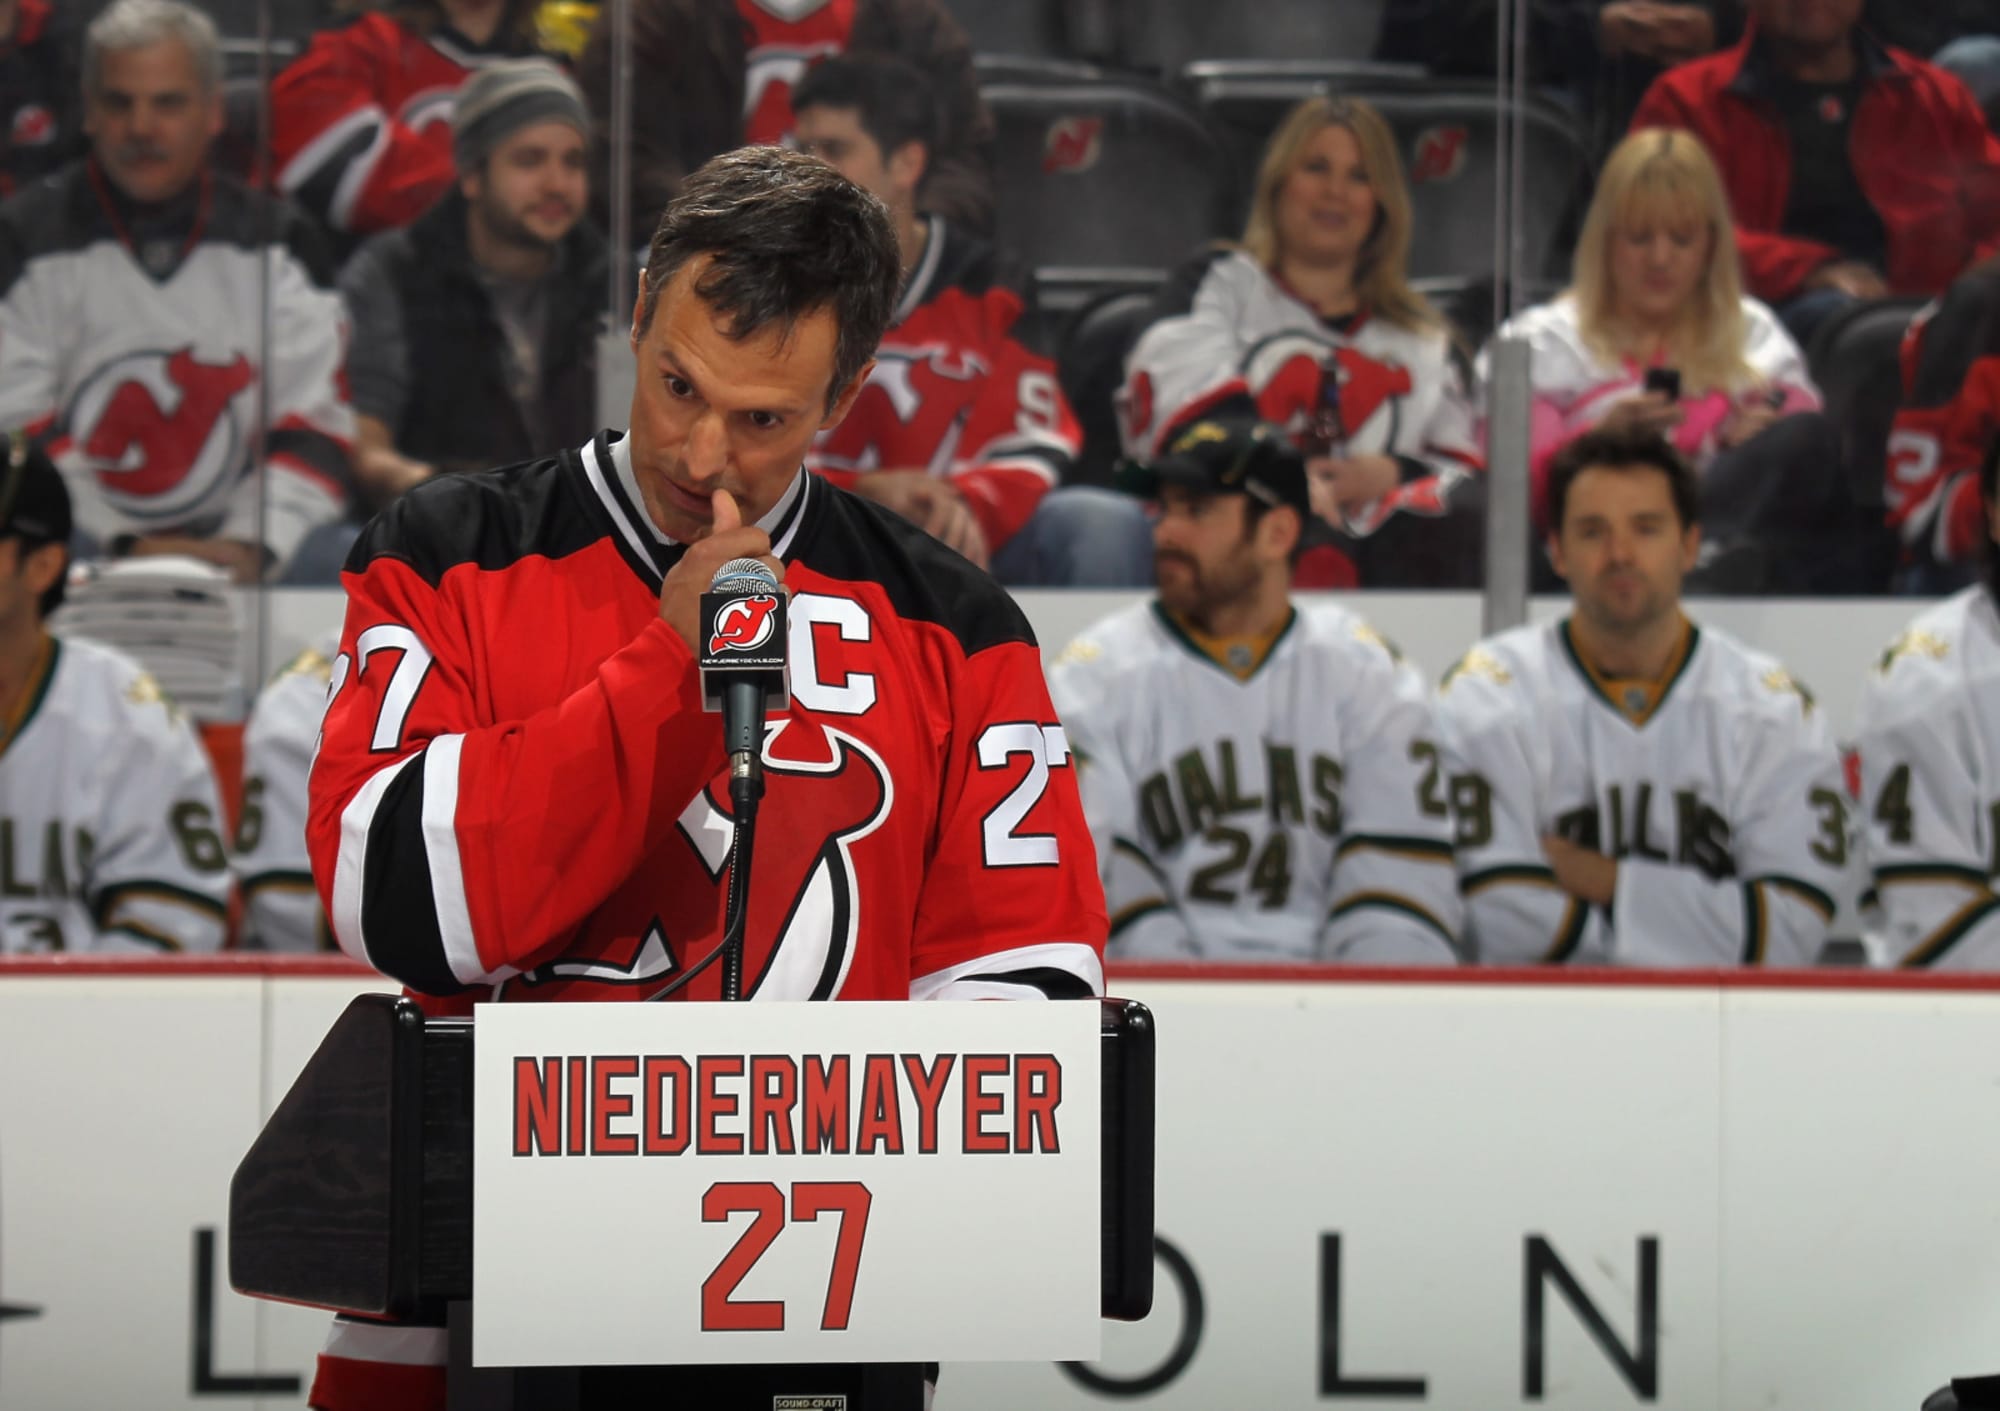 Scott Niedermayer recalls his Devils days as team retires his No